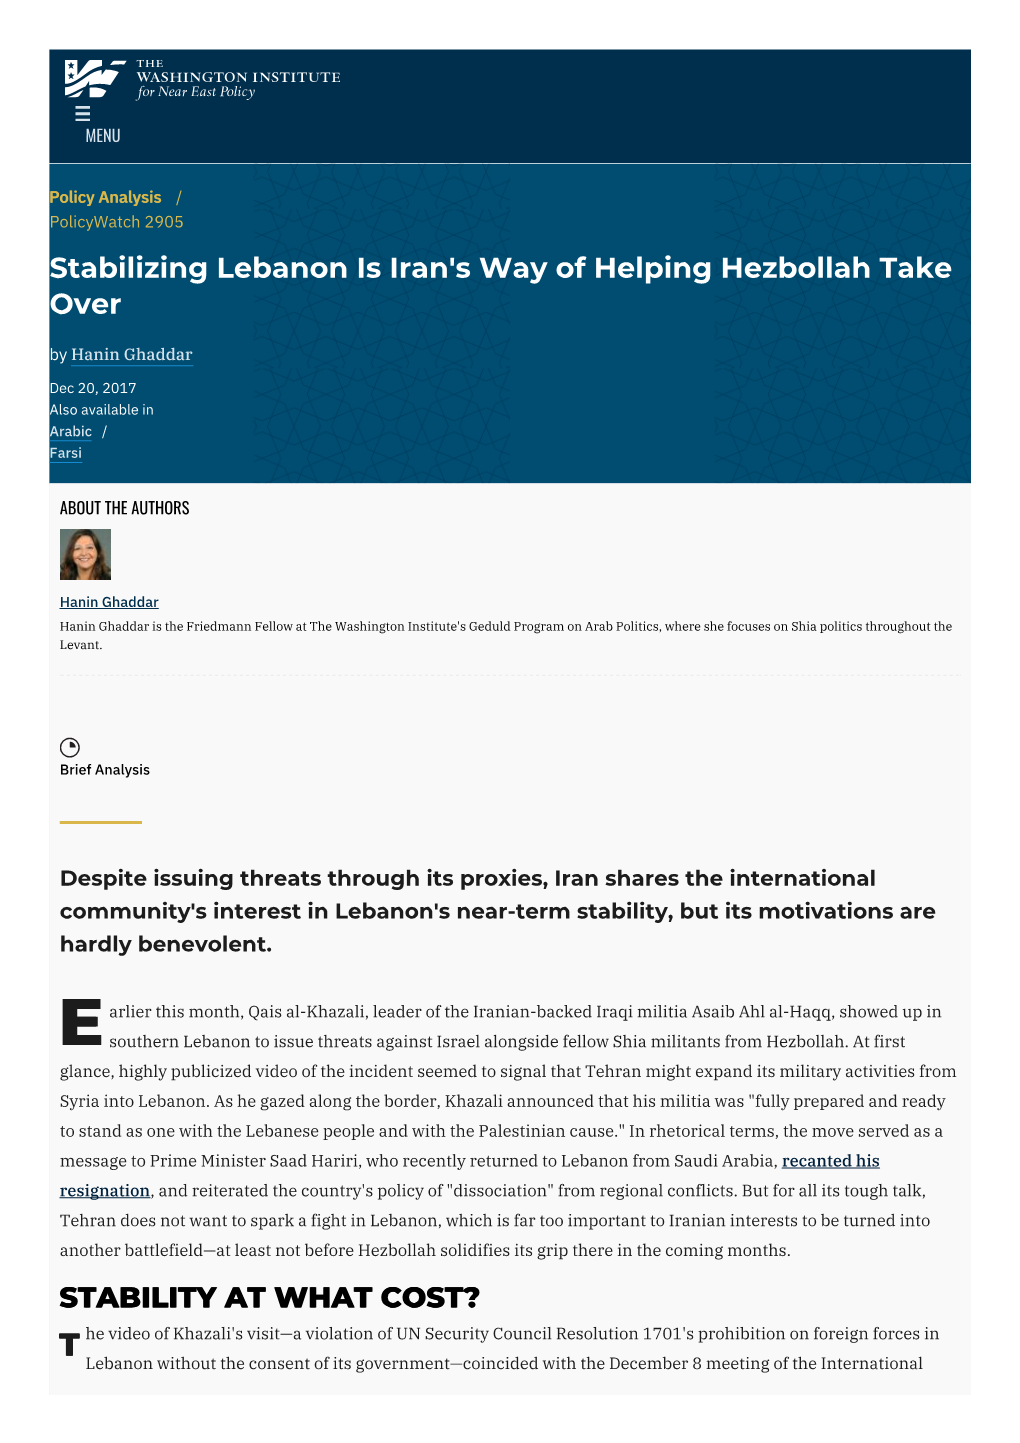 Stabilizing Lebanon Is Iran's Way of Helping Hezbollah Take Over by Hanin Ghaddar